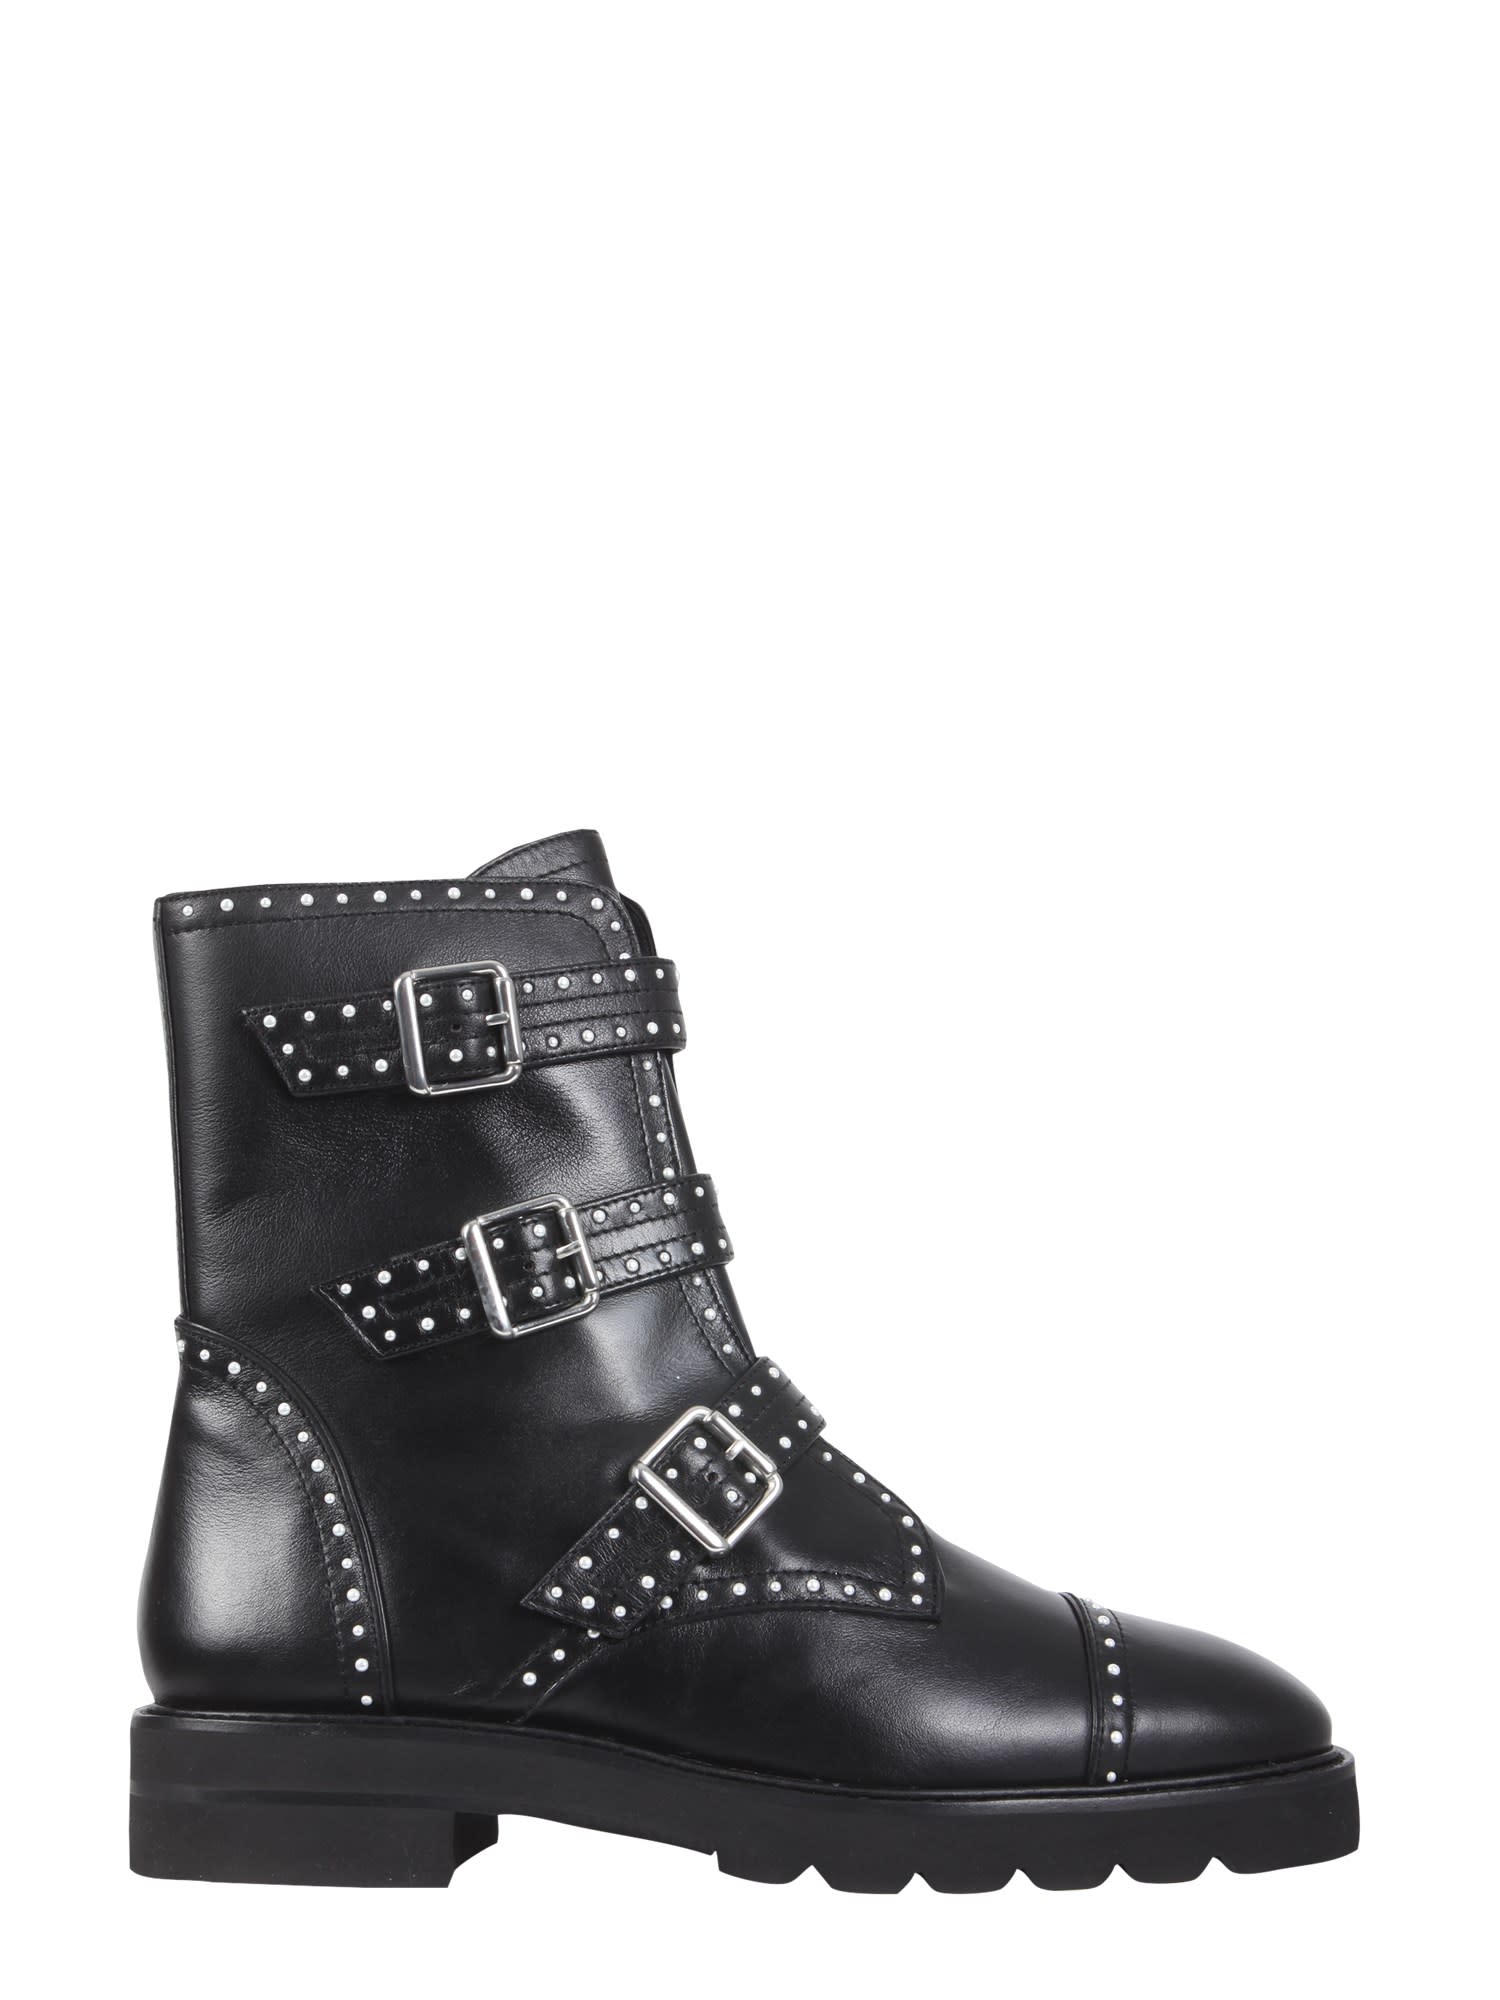 Buy Stuart Weitzman Jesse Boots online, shop Stuart Weitzman shoes with free shipping